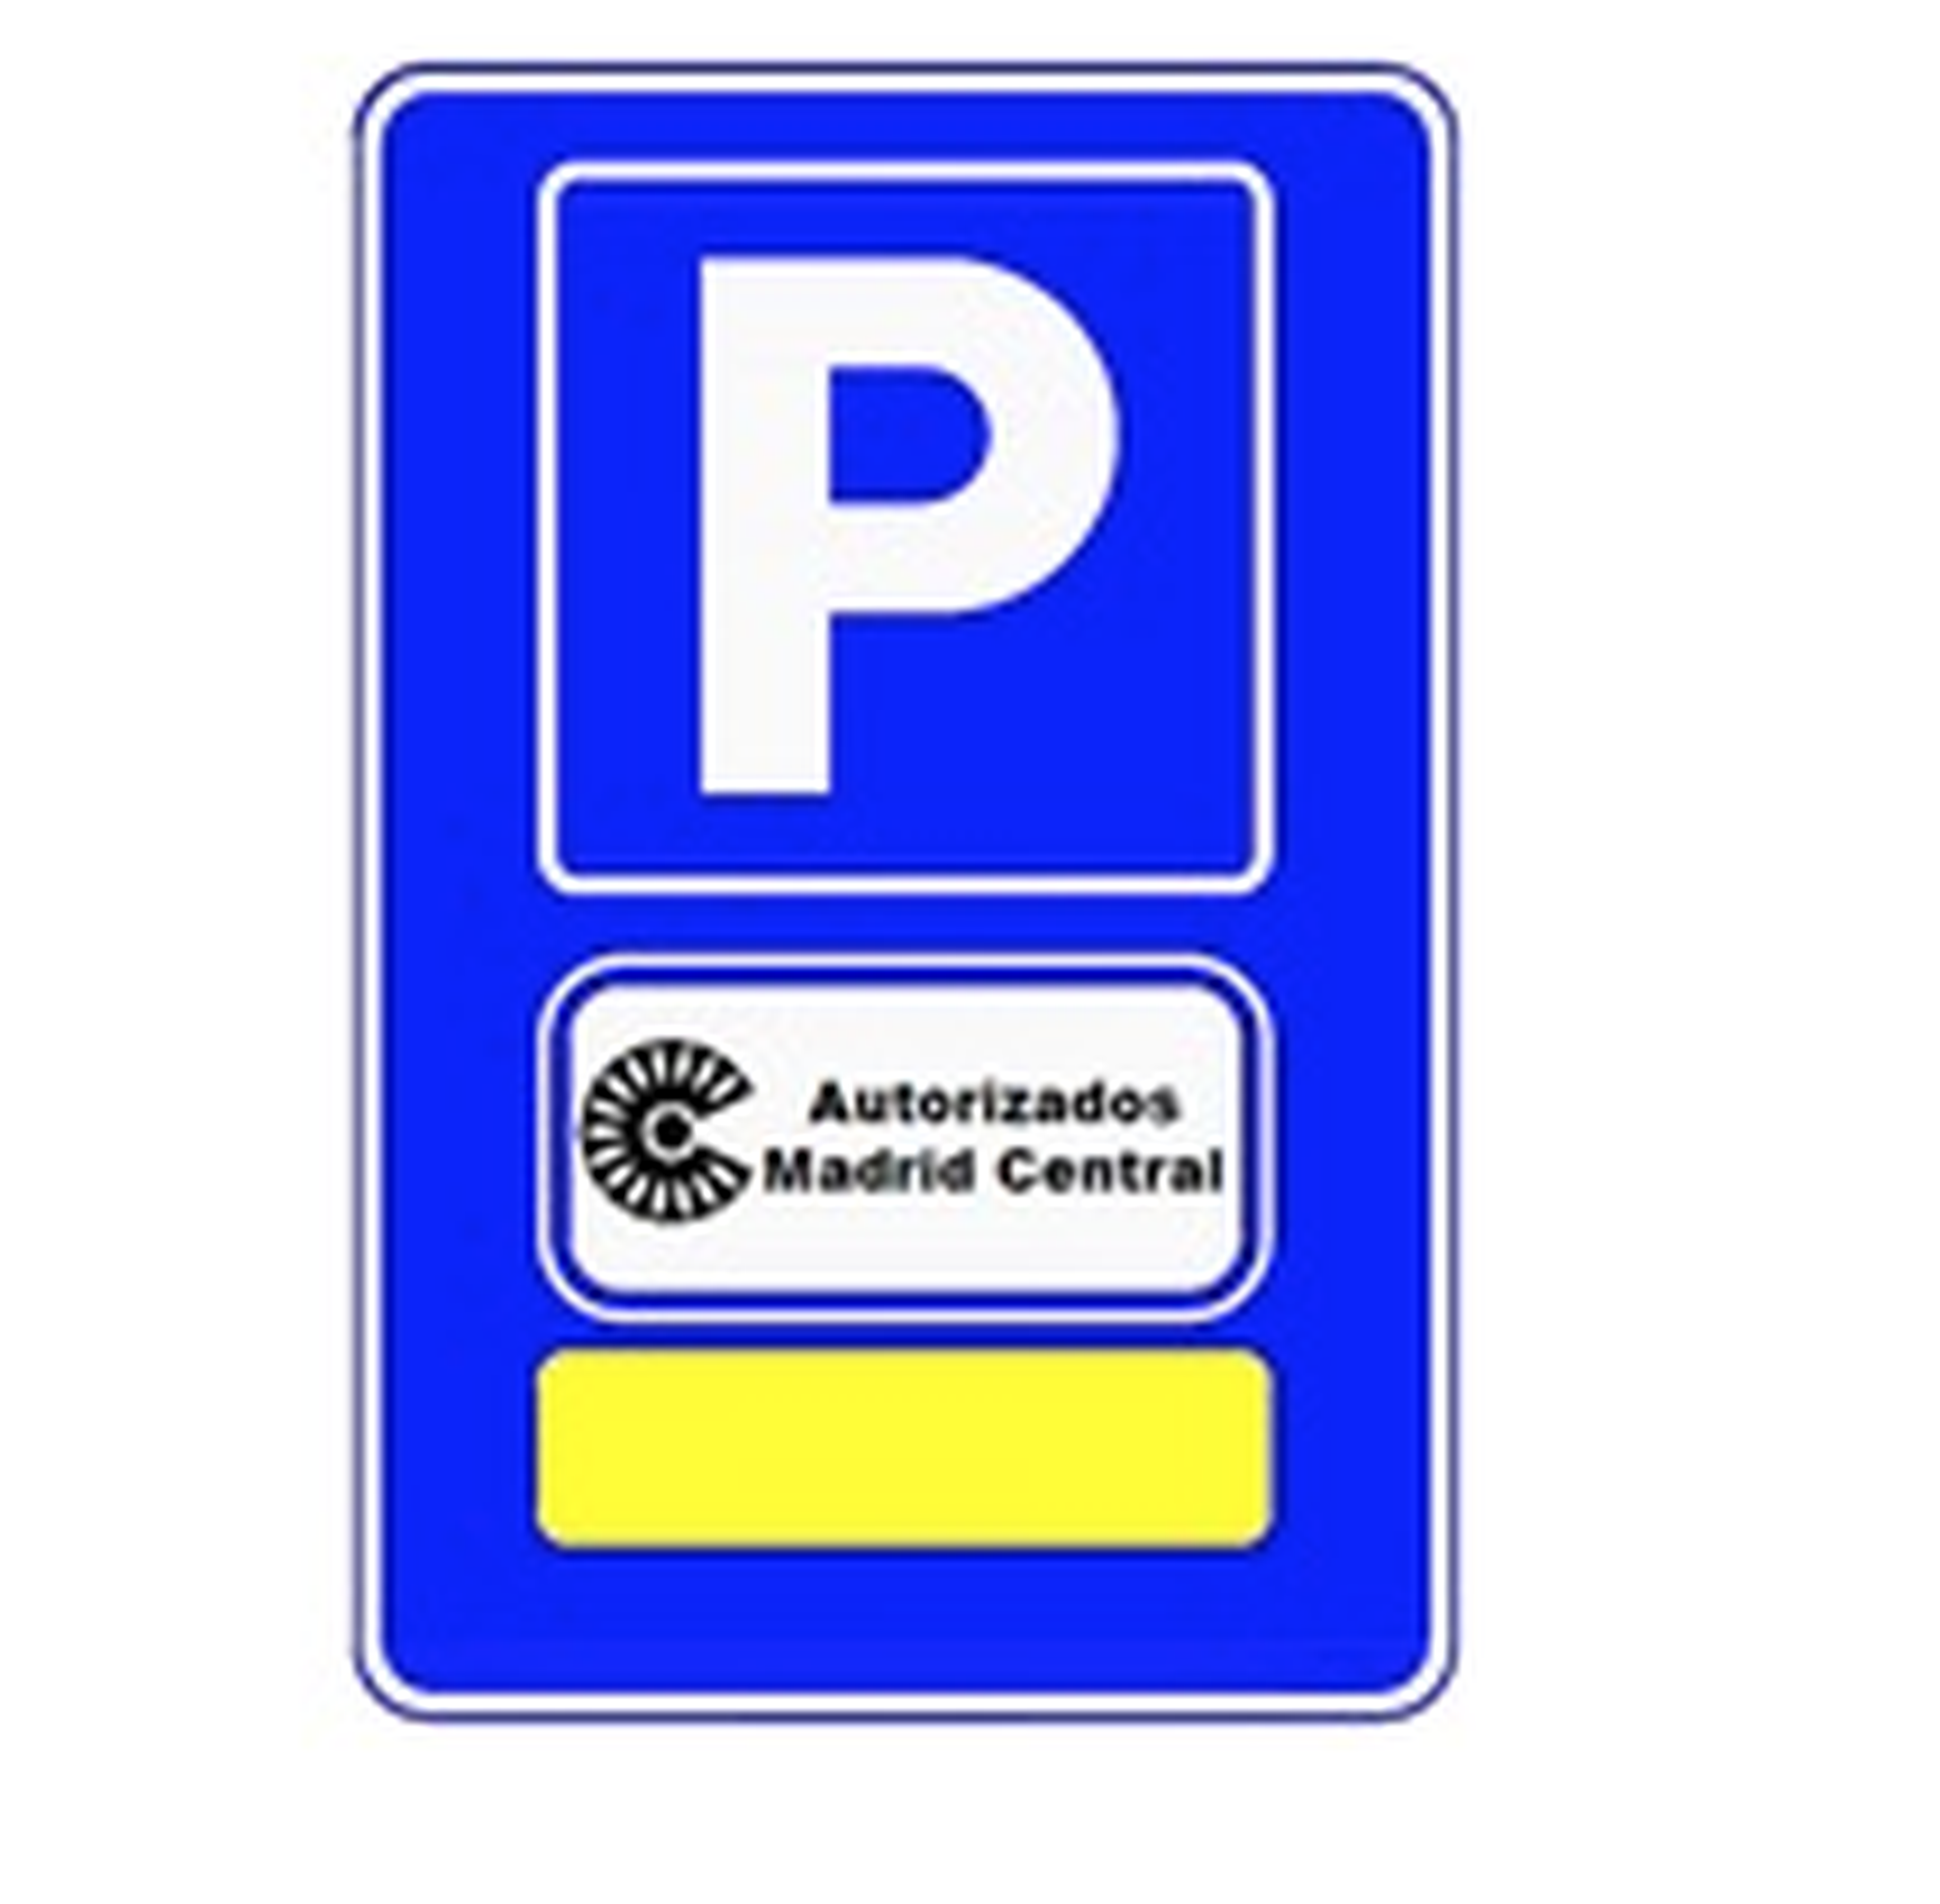 Placa parkings autorizados Madrid Central